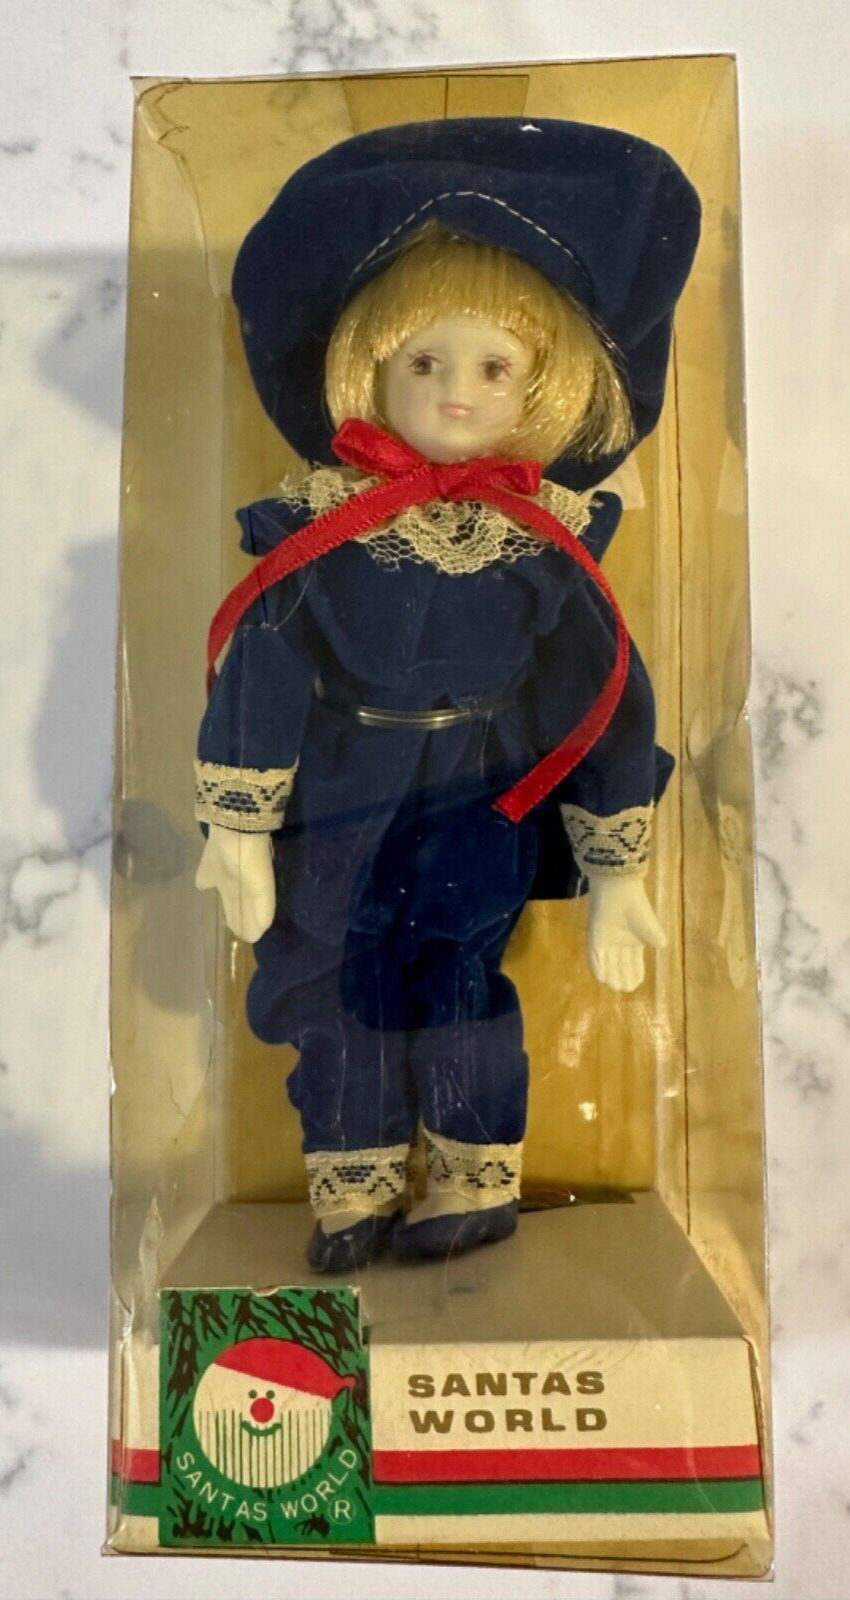 Santas World KURT ADLER Porcelain Doll Ornaments - Blue Outfit  - Vintage